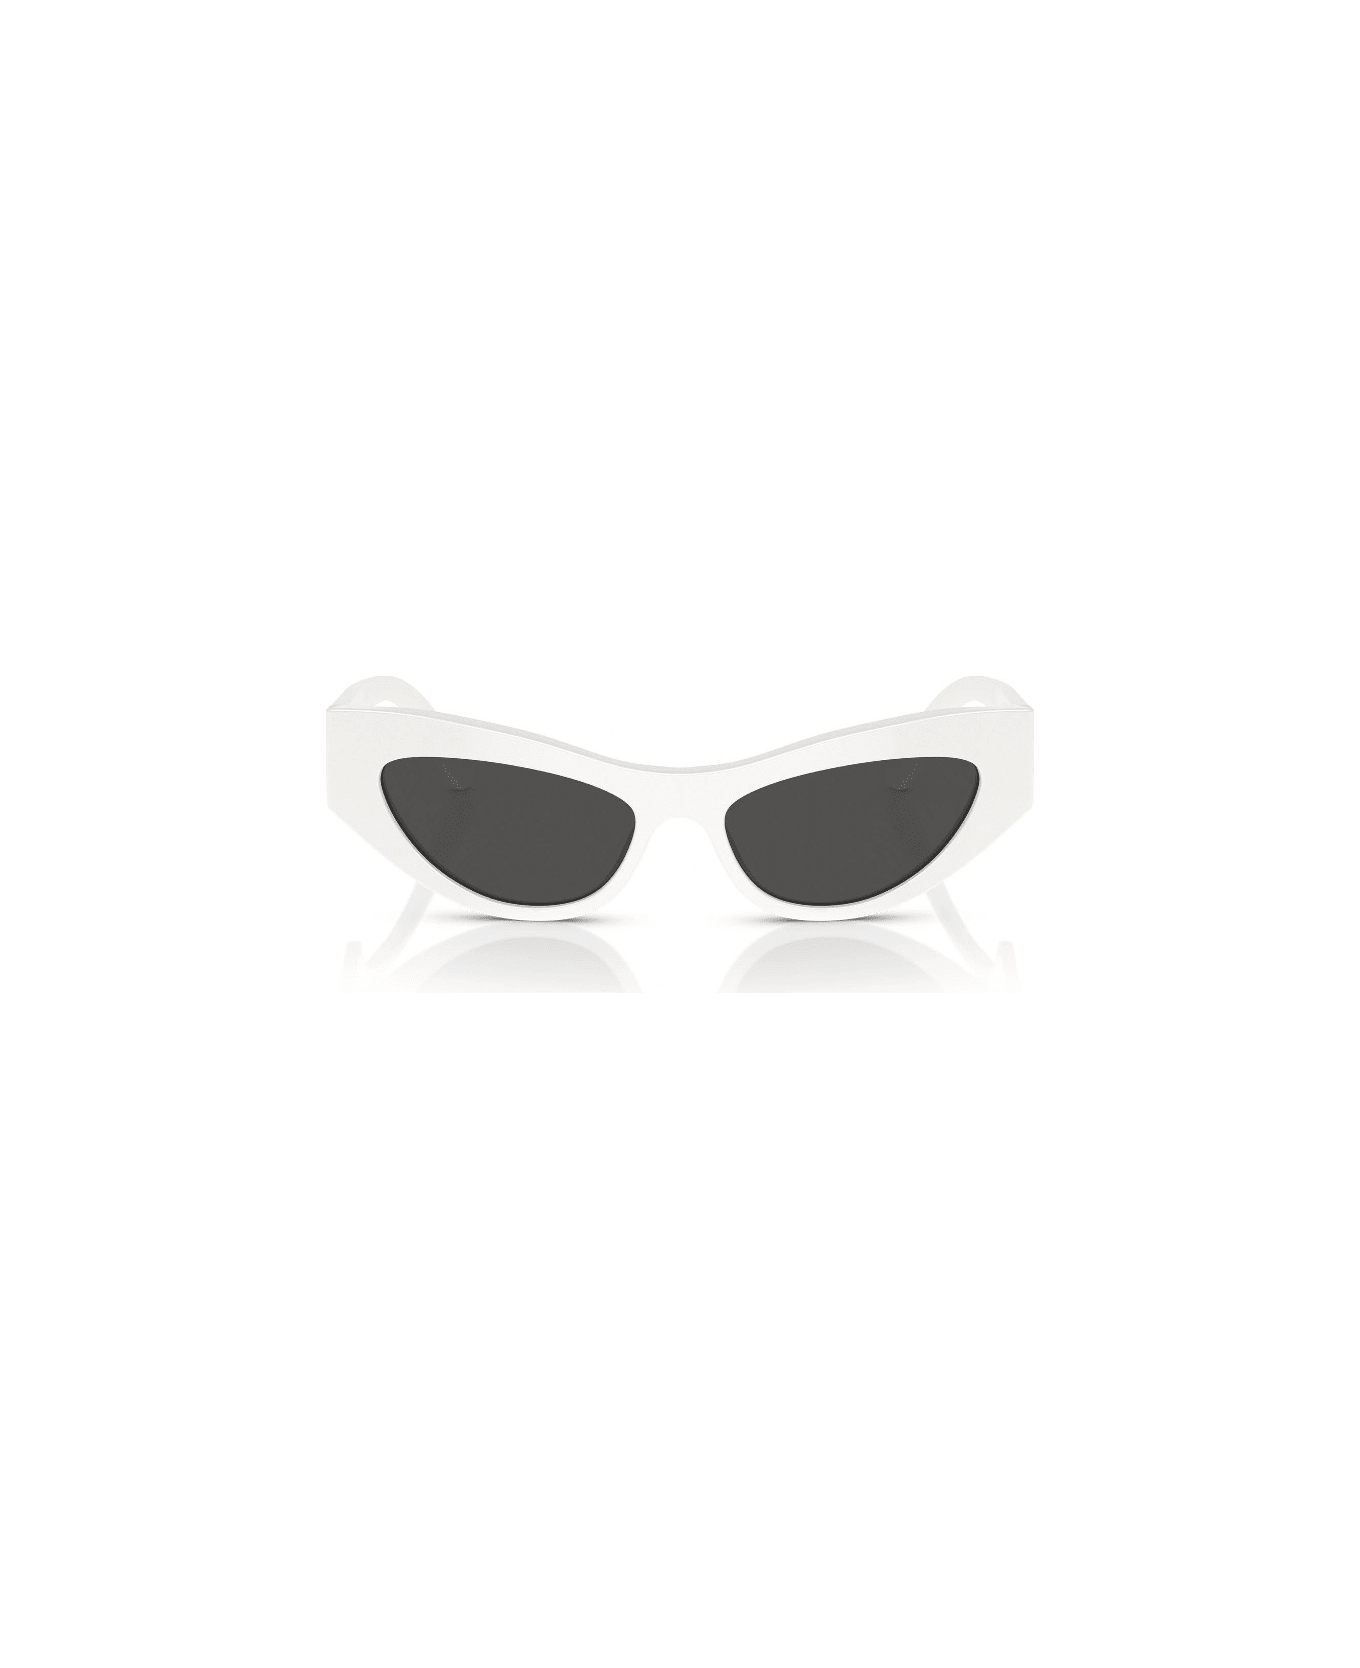 Dolce & Gabbana Eyewear DG4450s 3312/87 Sunglasses - Bianco サングラス